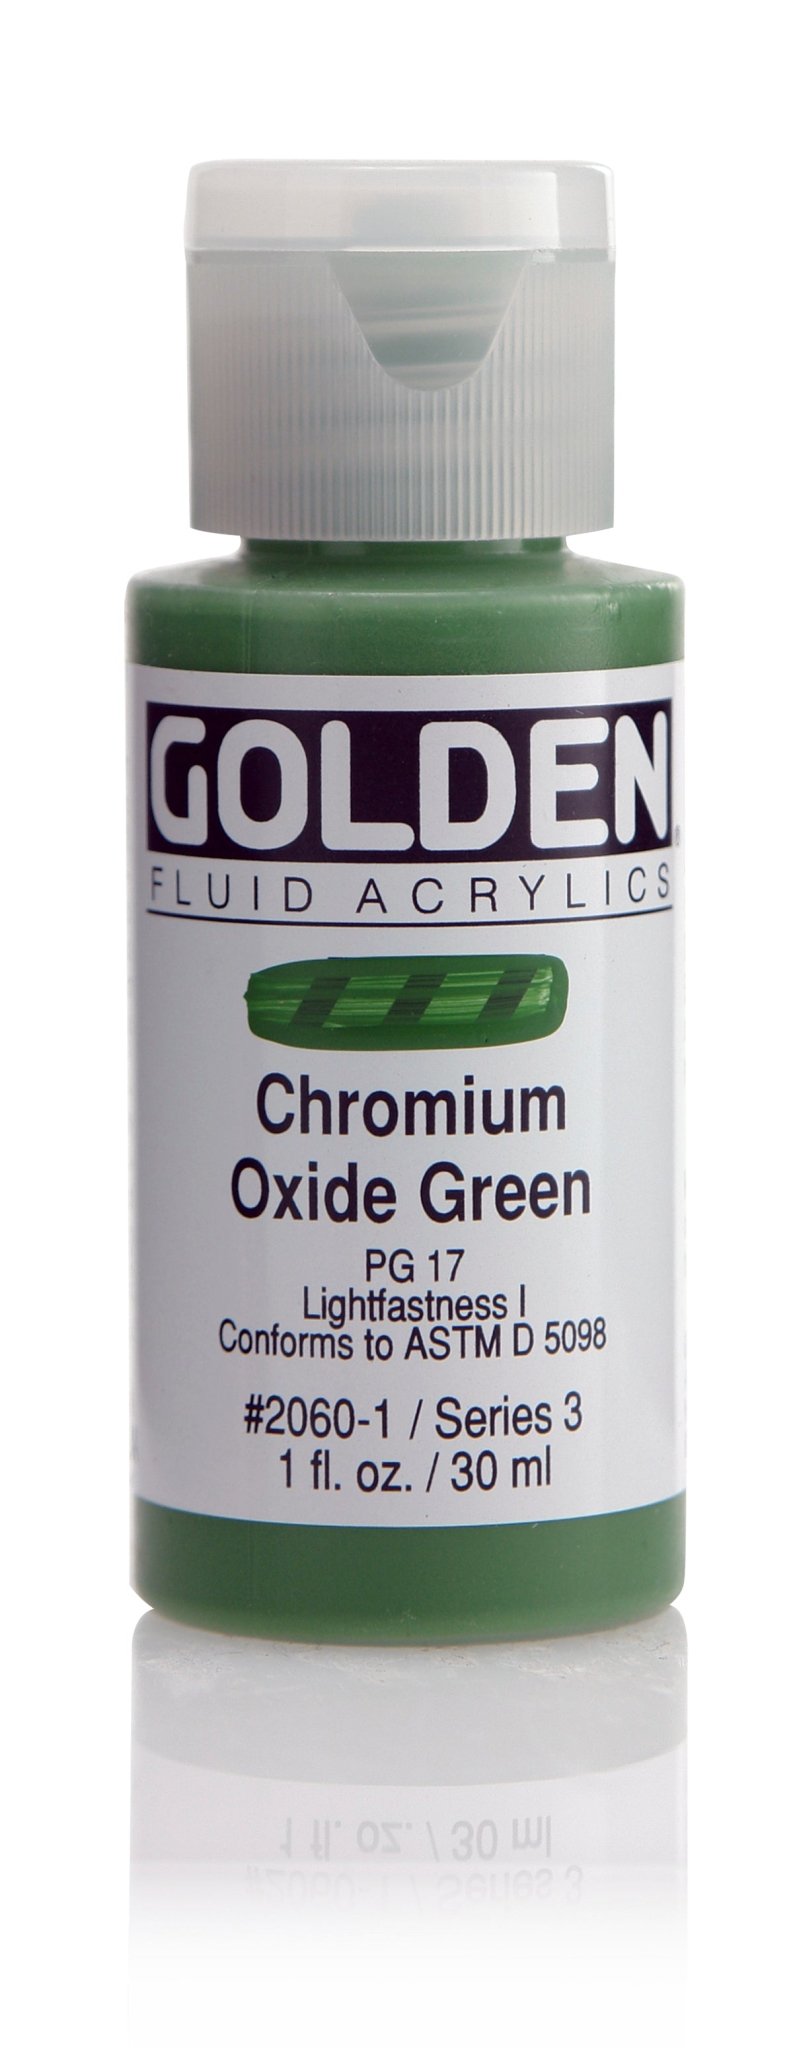 Golden Fluid Acrylic 30ml Chromium Oxide Green - theartshop.com.au